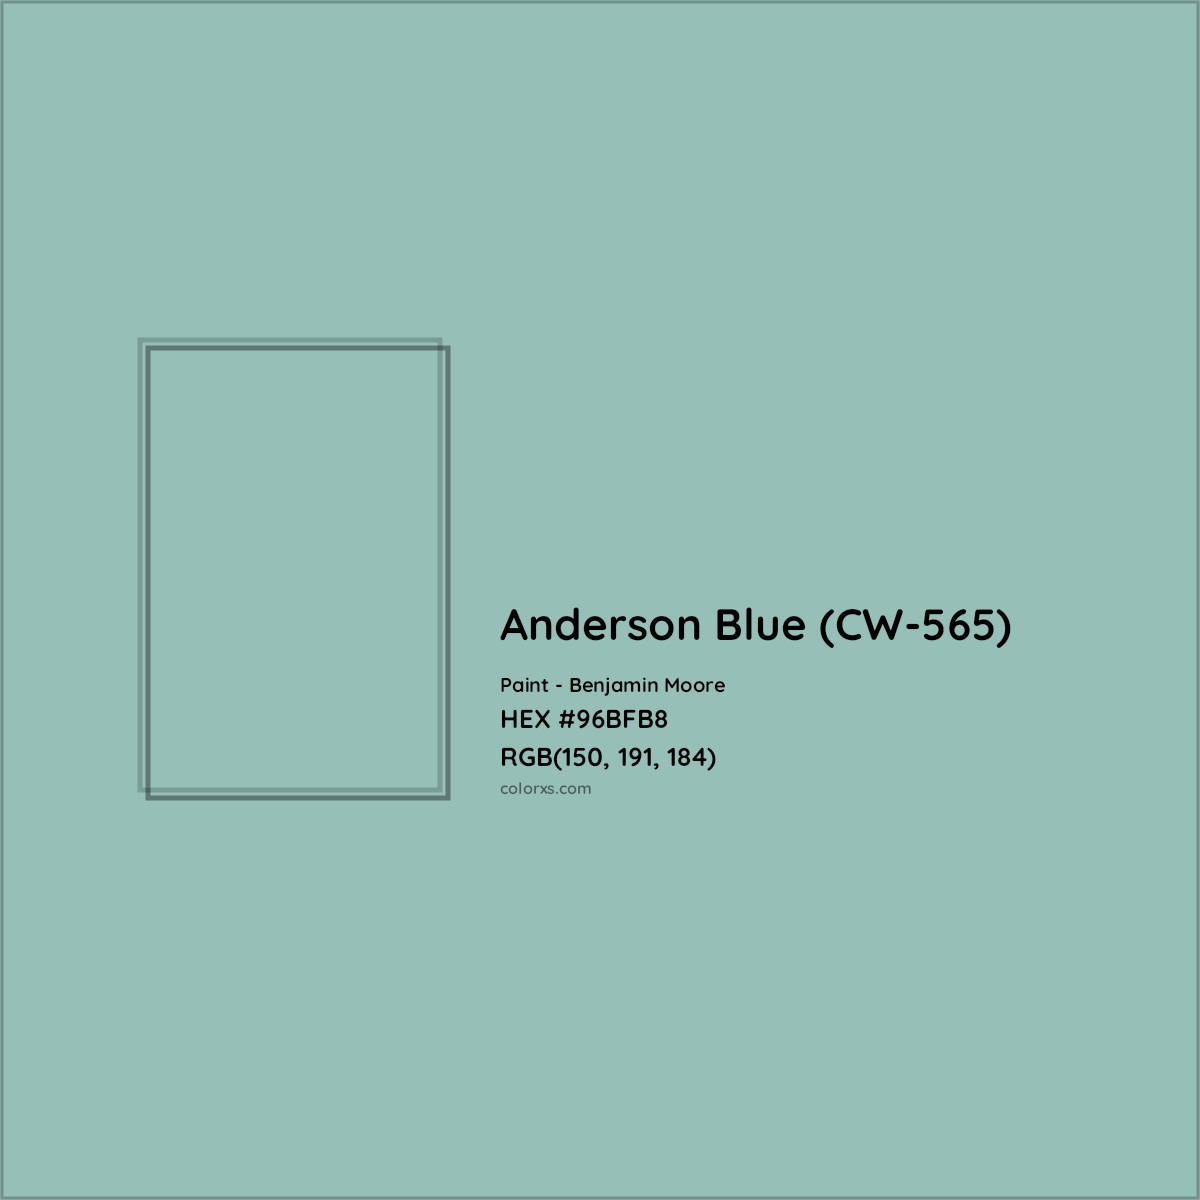 HEX #96BFB8 Anderson Blue (CW-565) Paint Benjamin Moore - Color Code